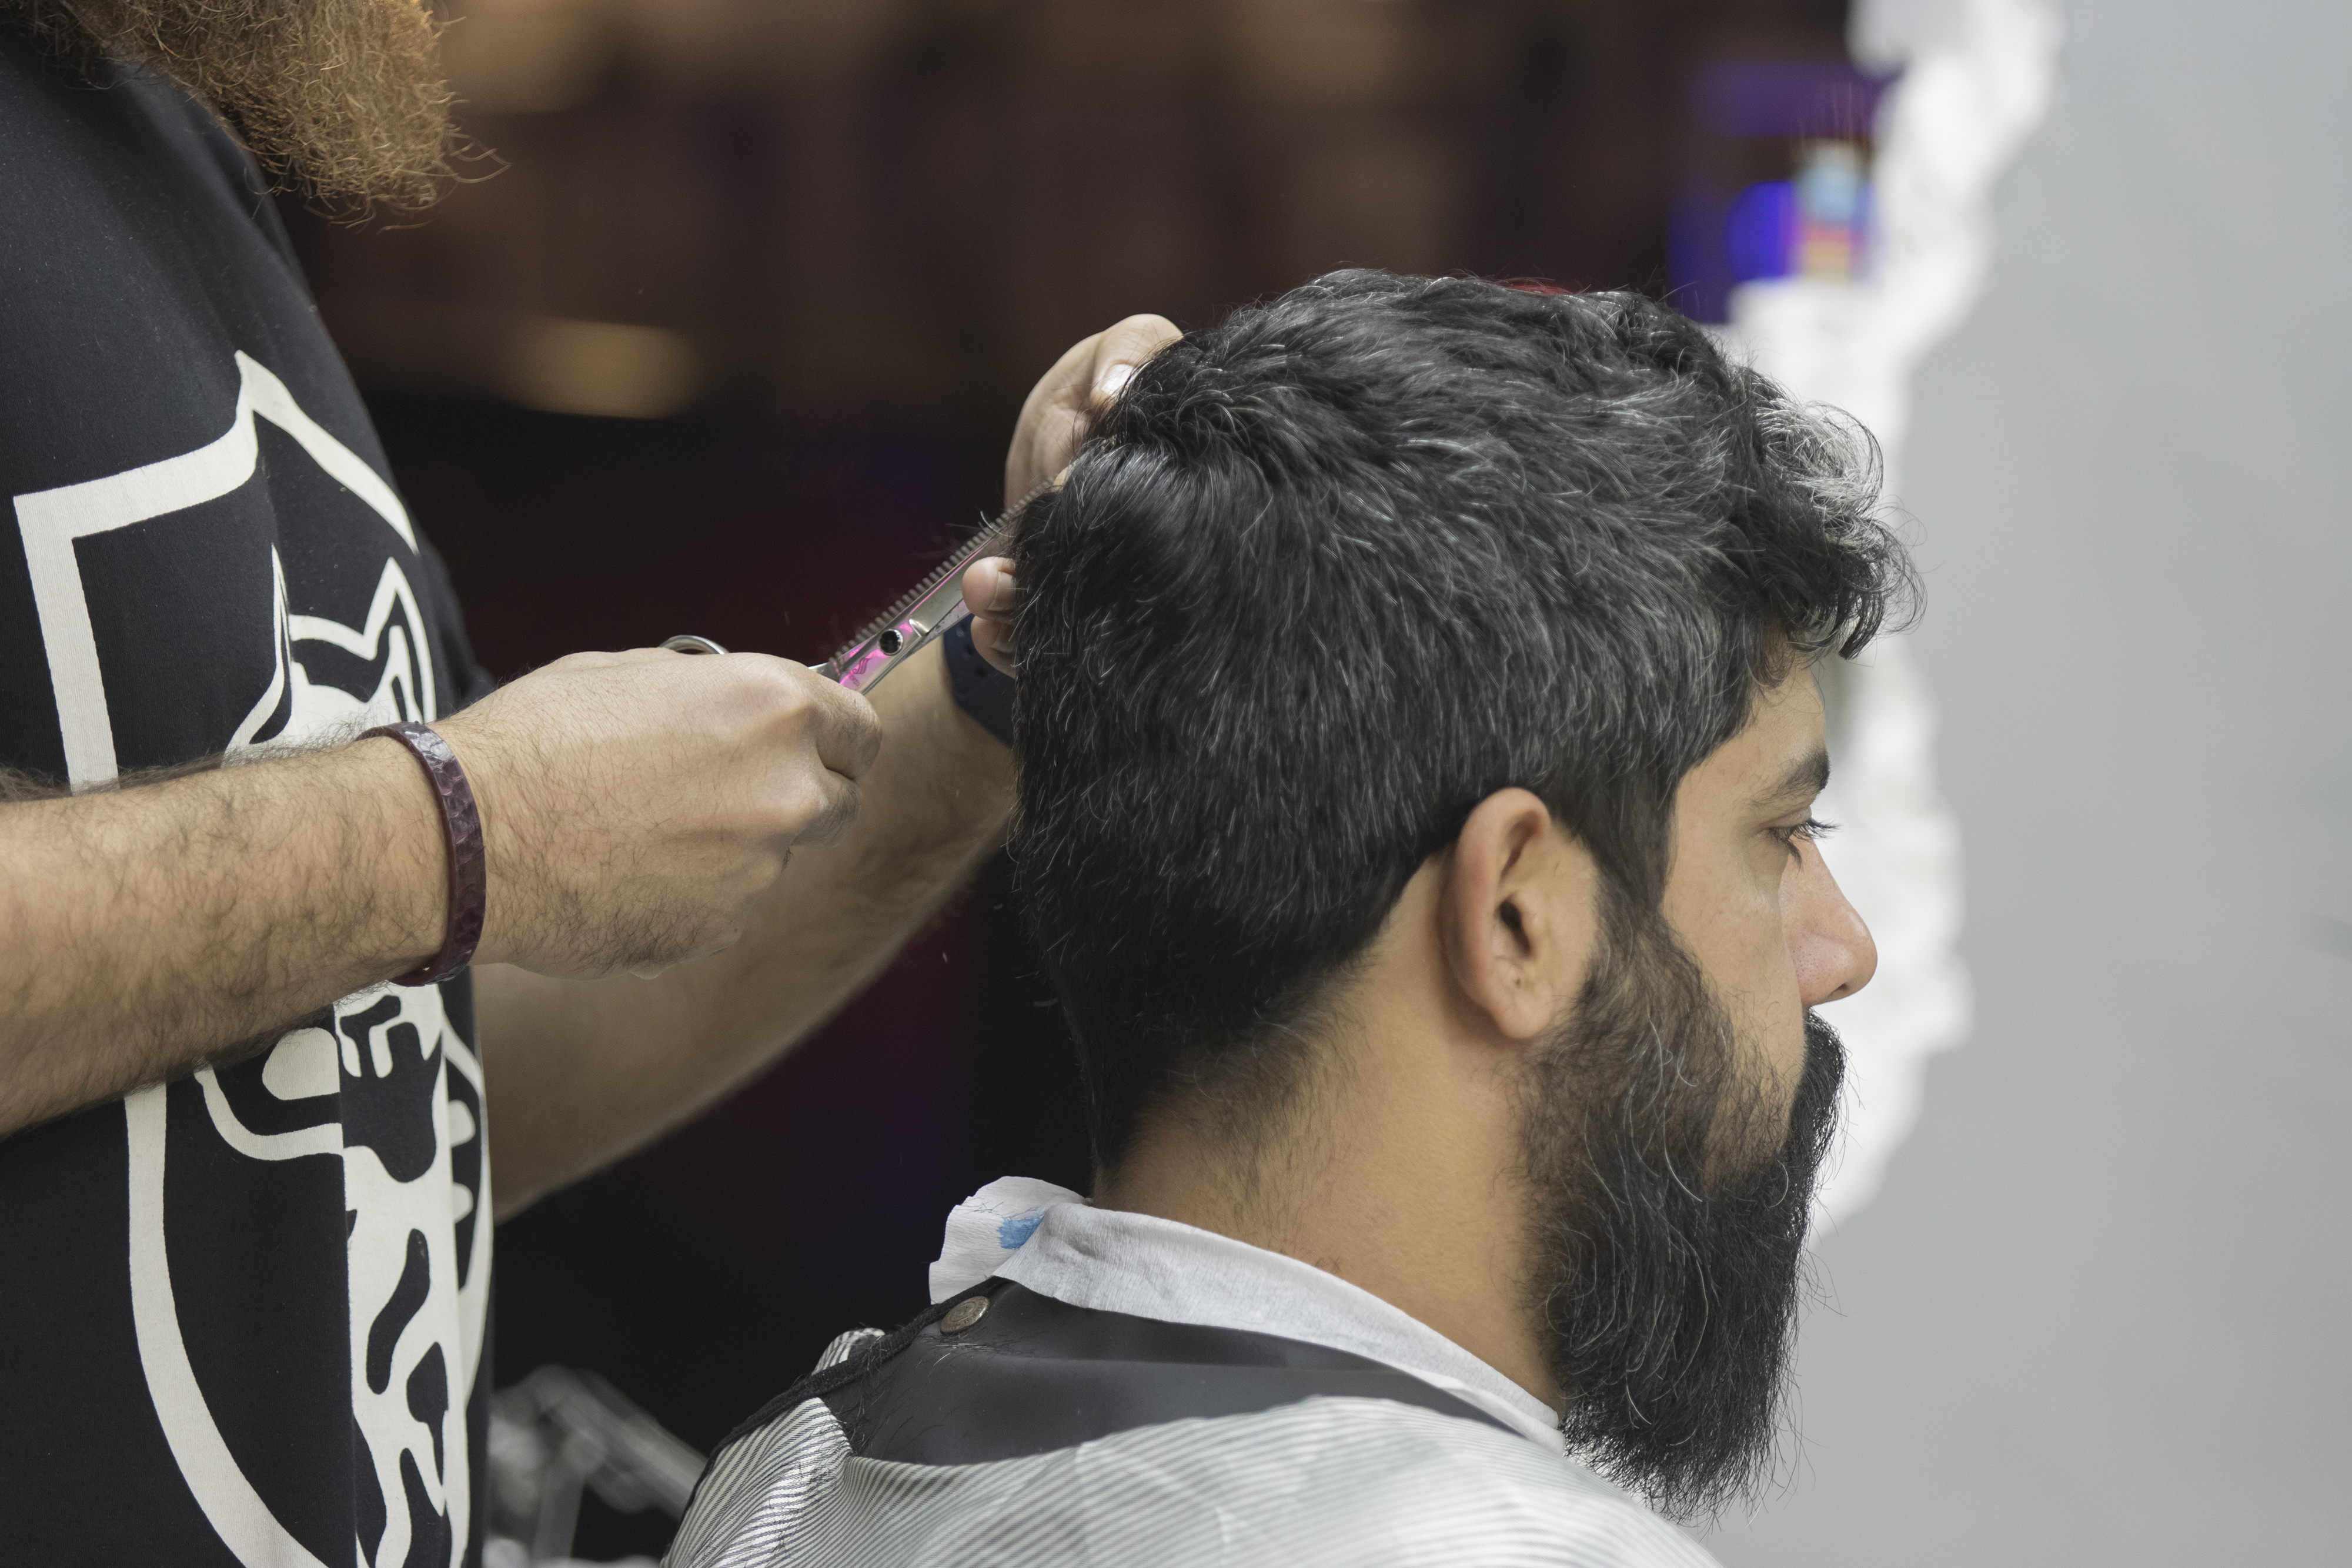 File:Barbershop In Iran - Barber, Hairdresser 09.jpg - Wikimedia Commons